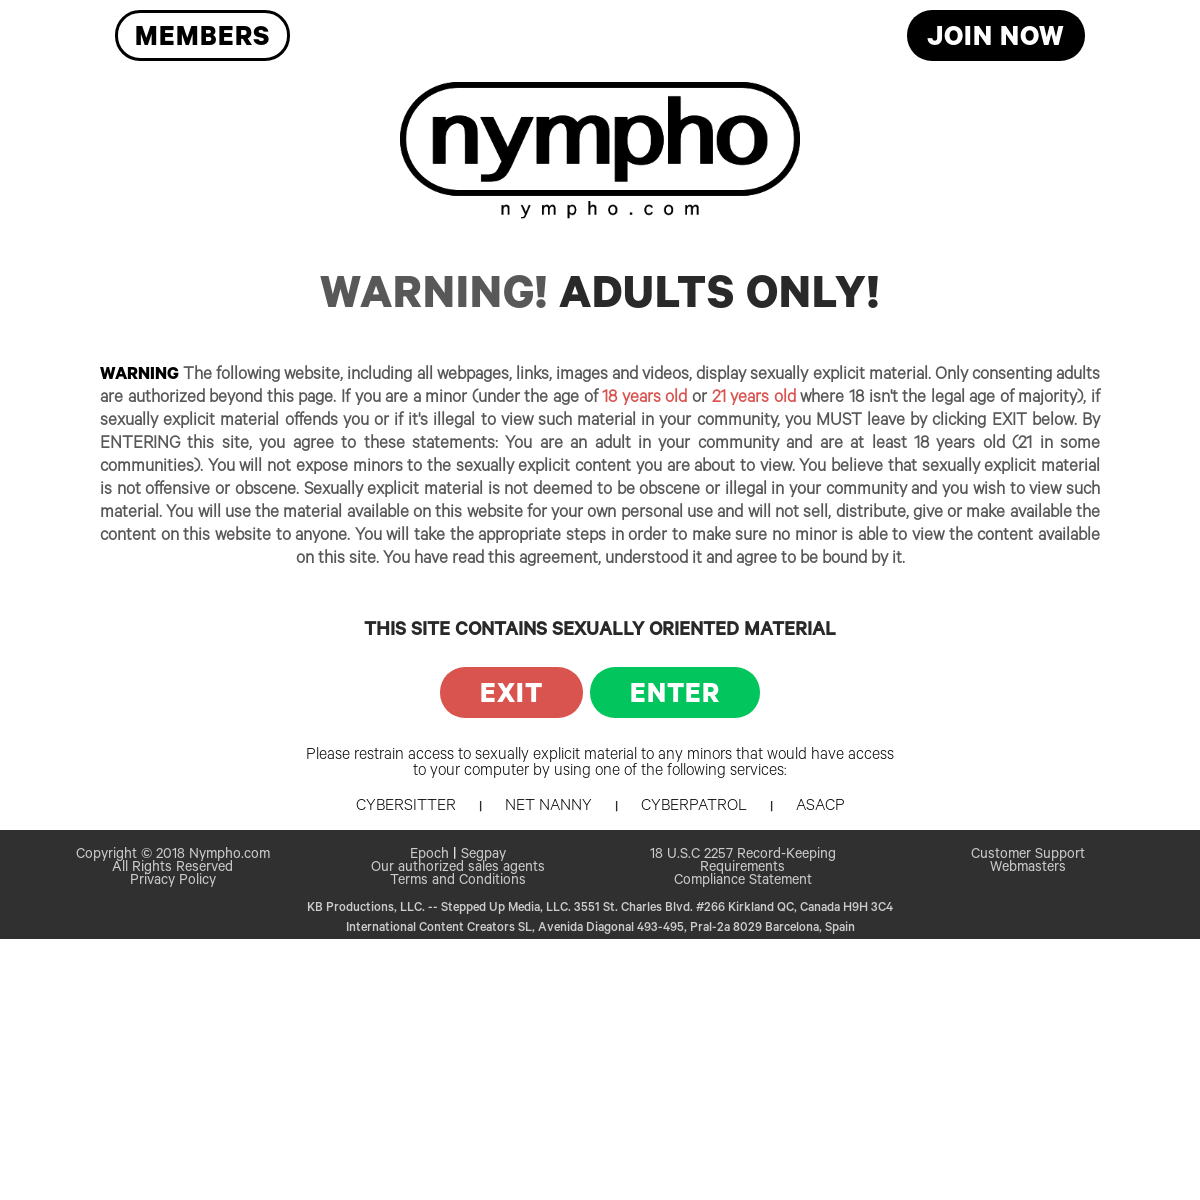 A complete backup of nympho.com